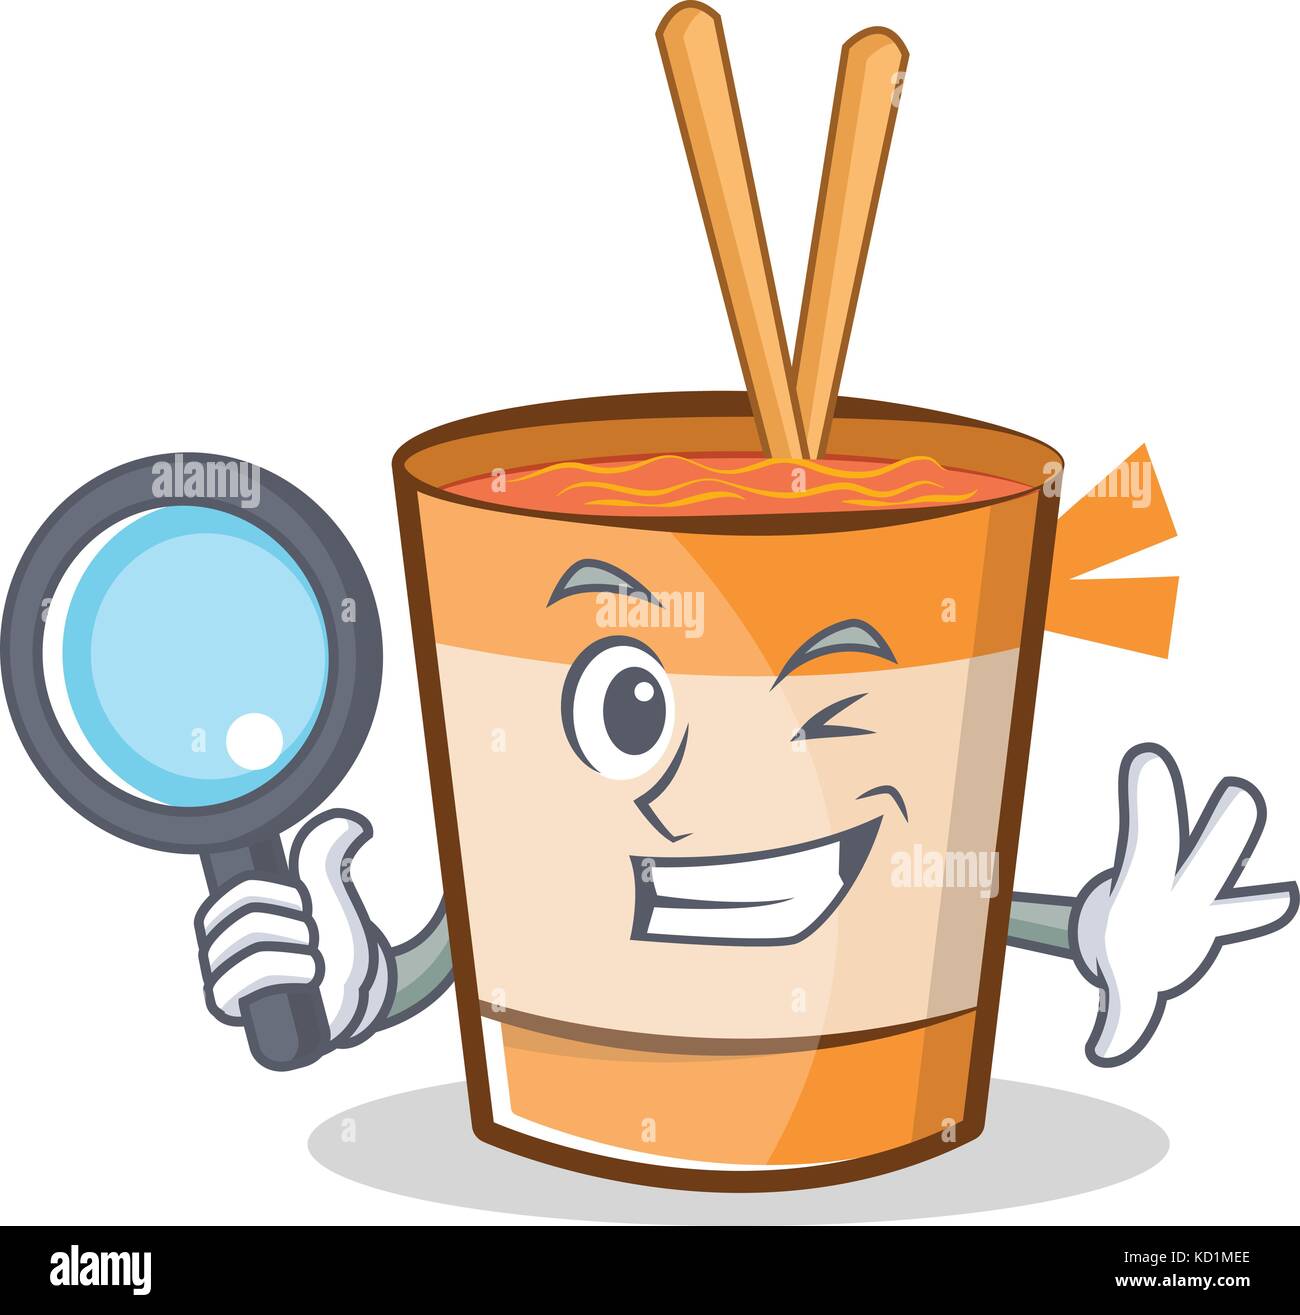 Detective cup noodles character cartoon Stock Vector Art ...